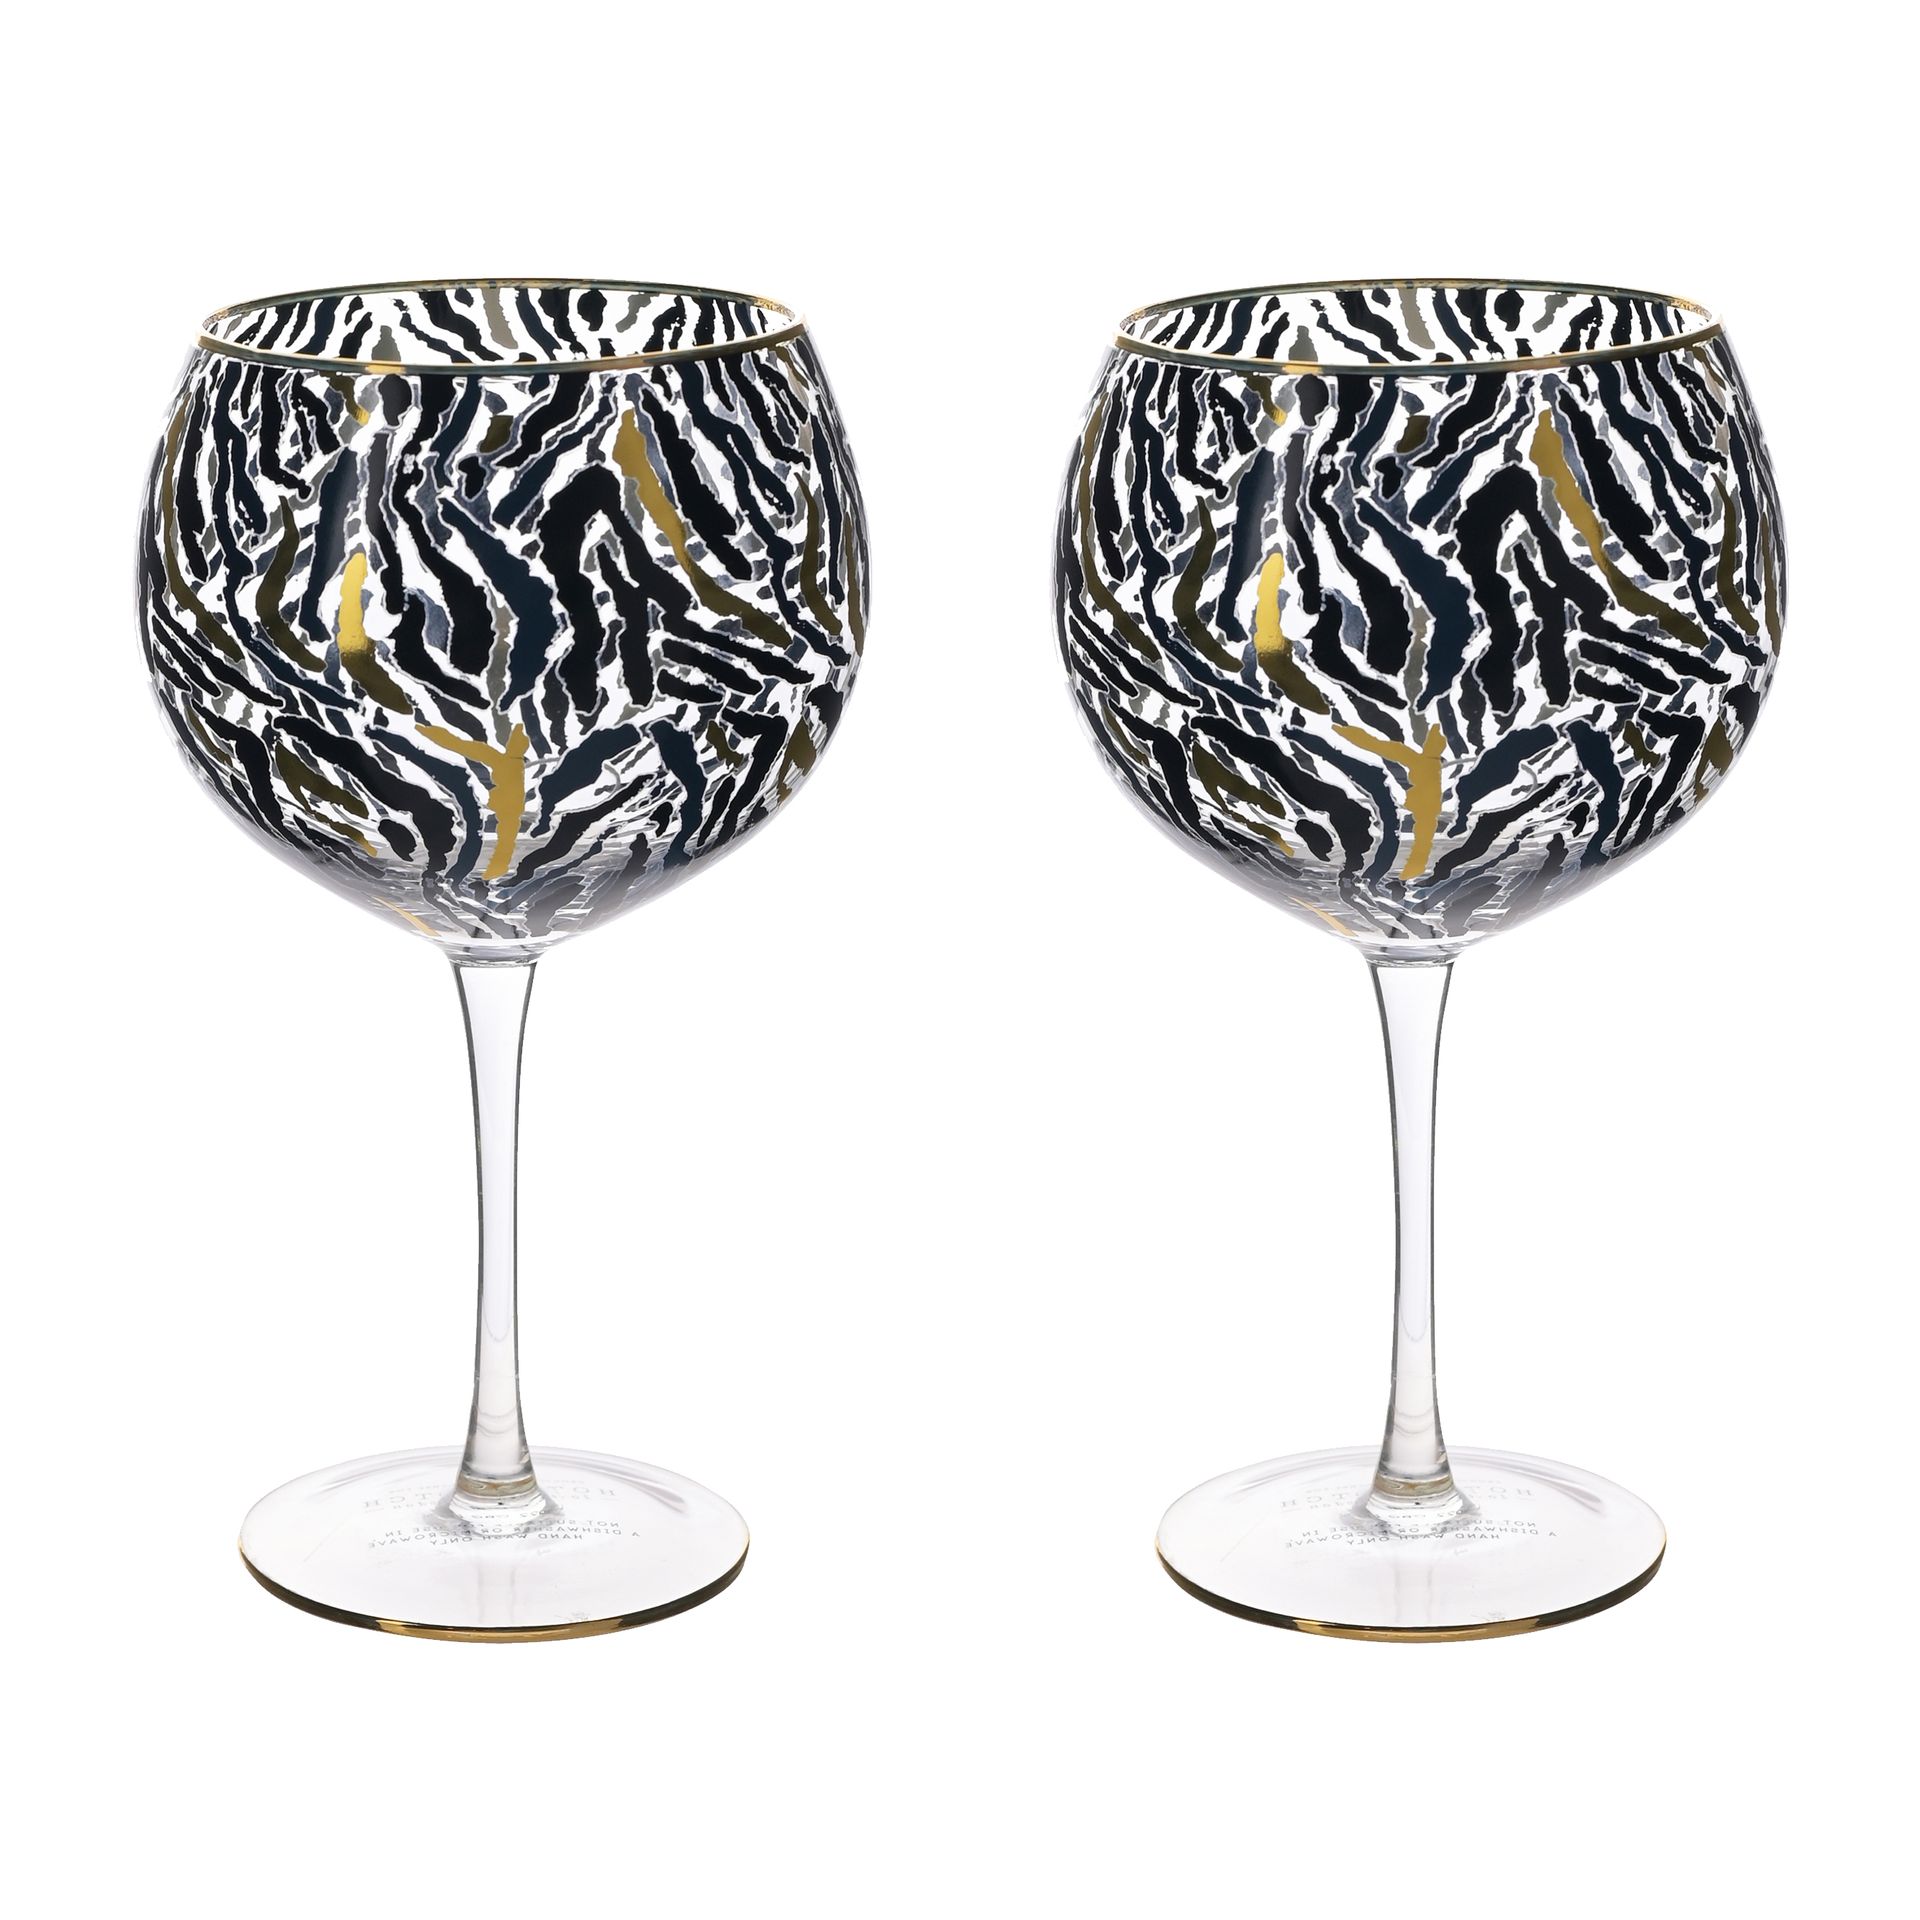 &Quirky Zebra Print Gin Glasses : Set of 2